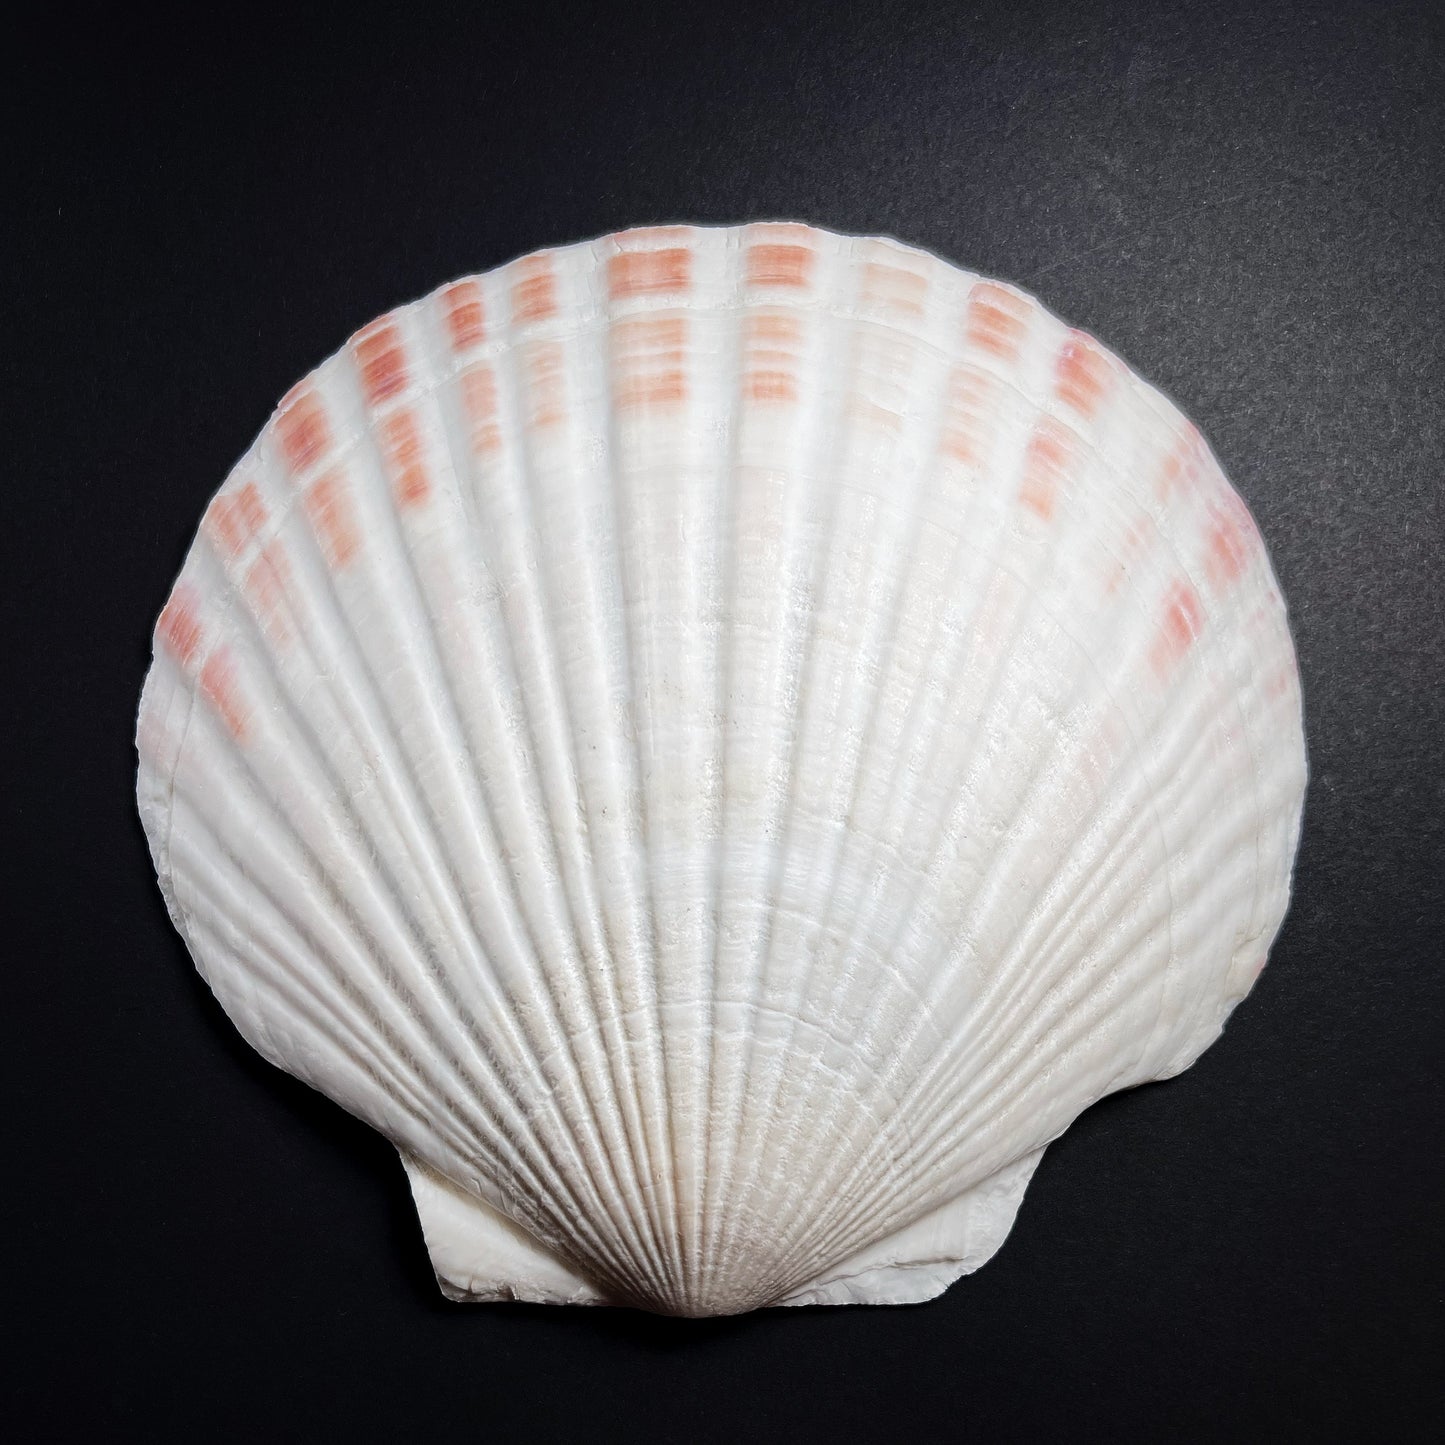 Ritual vessel - scallop shell, Pecten maximus, XL size 